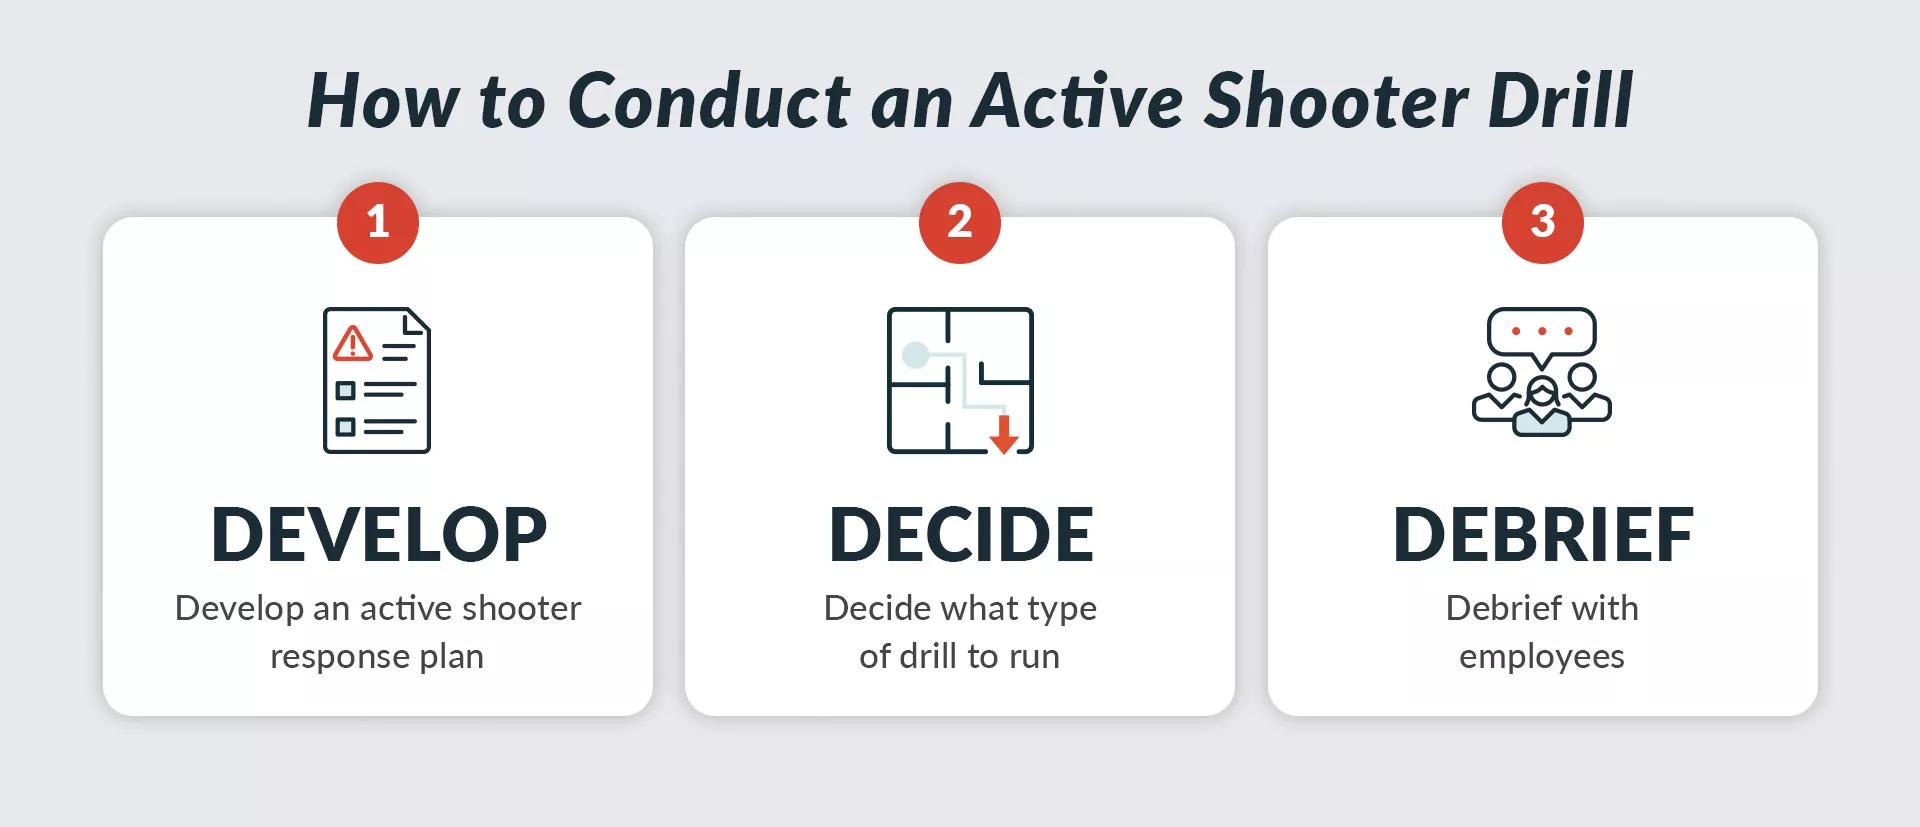 Steps in active shooter drills: Develop, decide, debrief